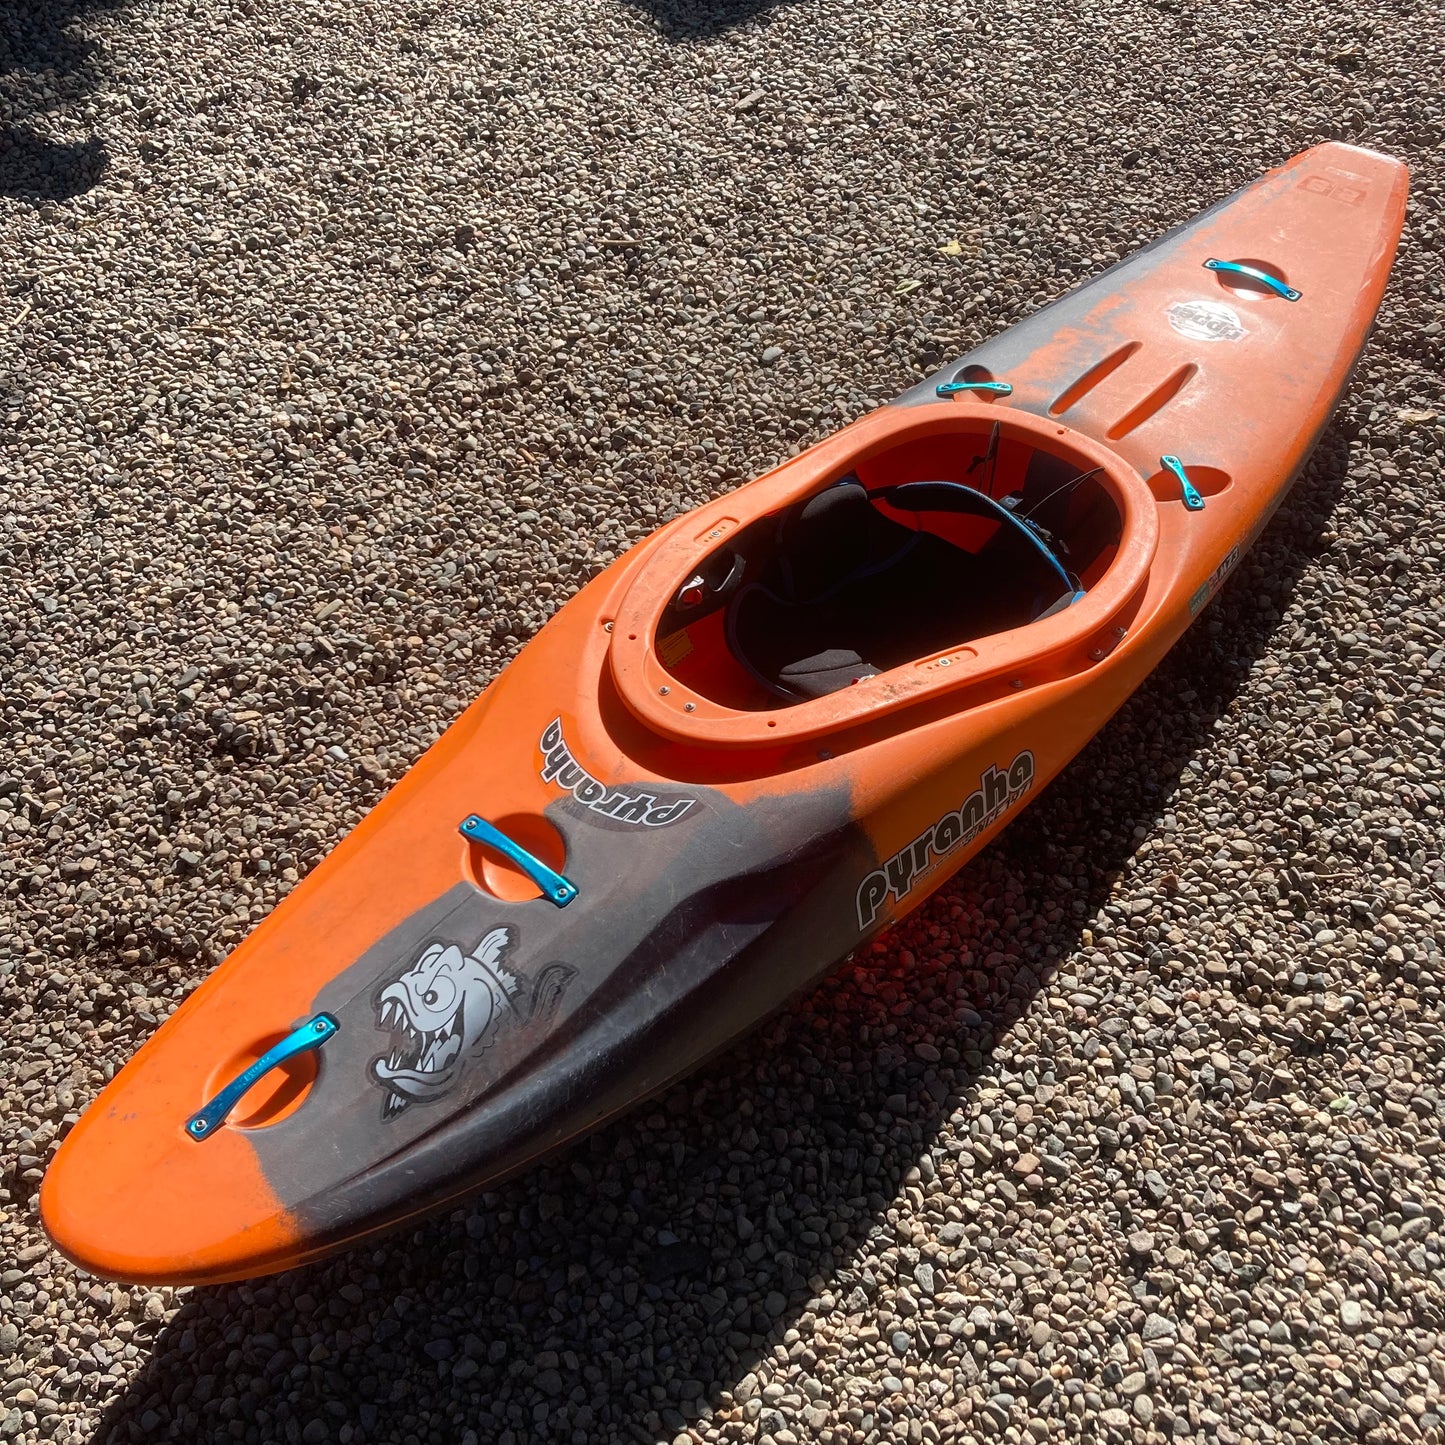 An orange and black Demo Ripper 2.0 SM kayak laying on the ground. Brand: Pyranha